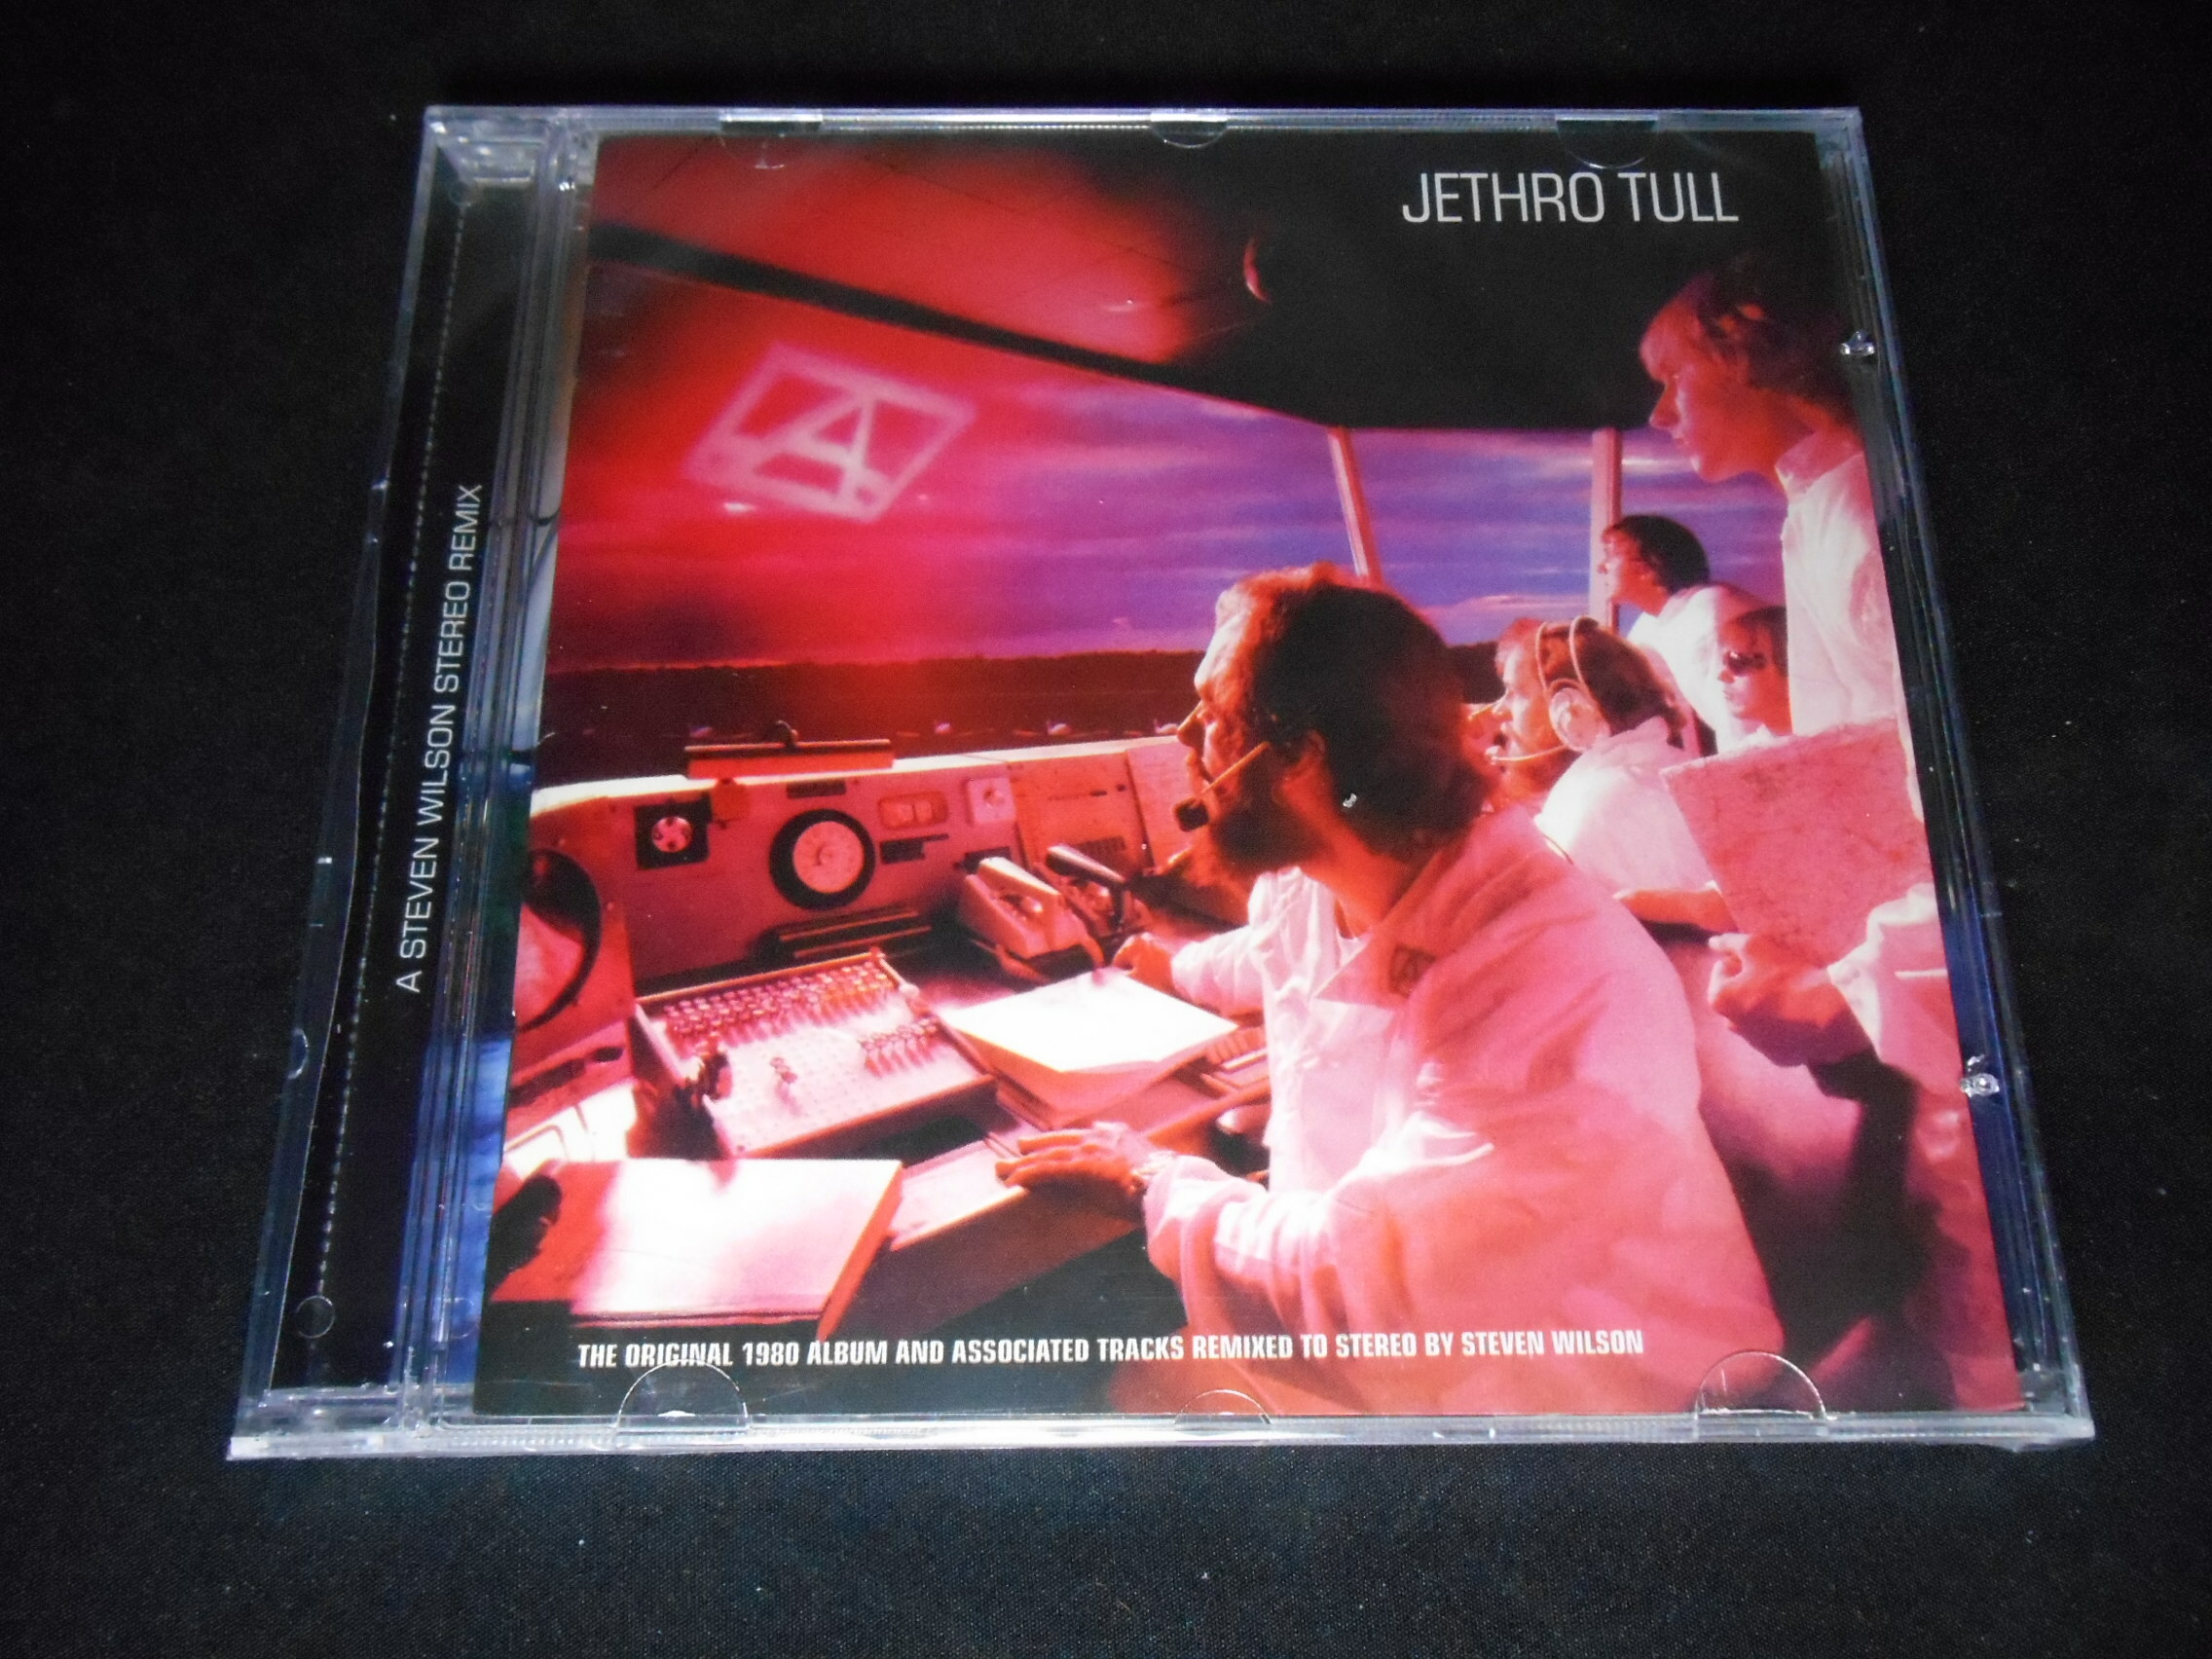 CD - Jethro Tull - A